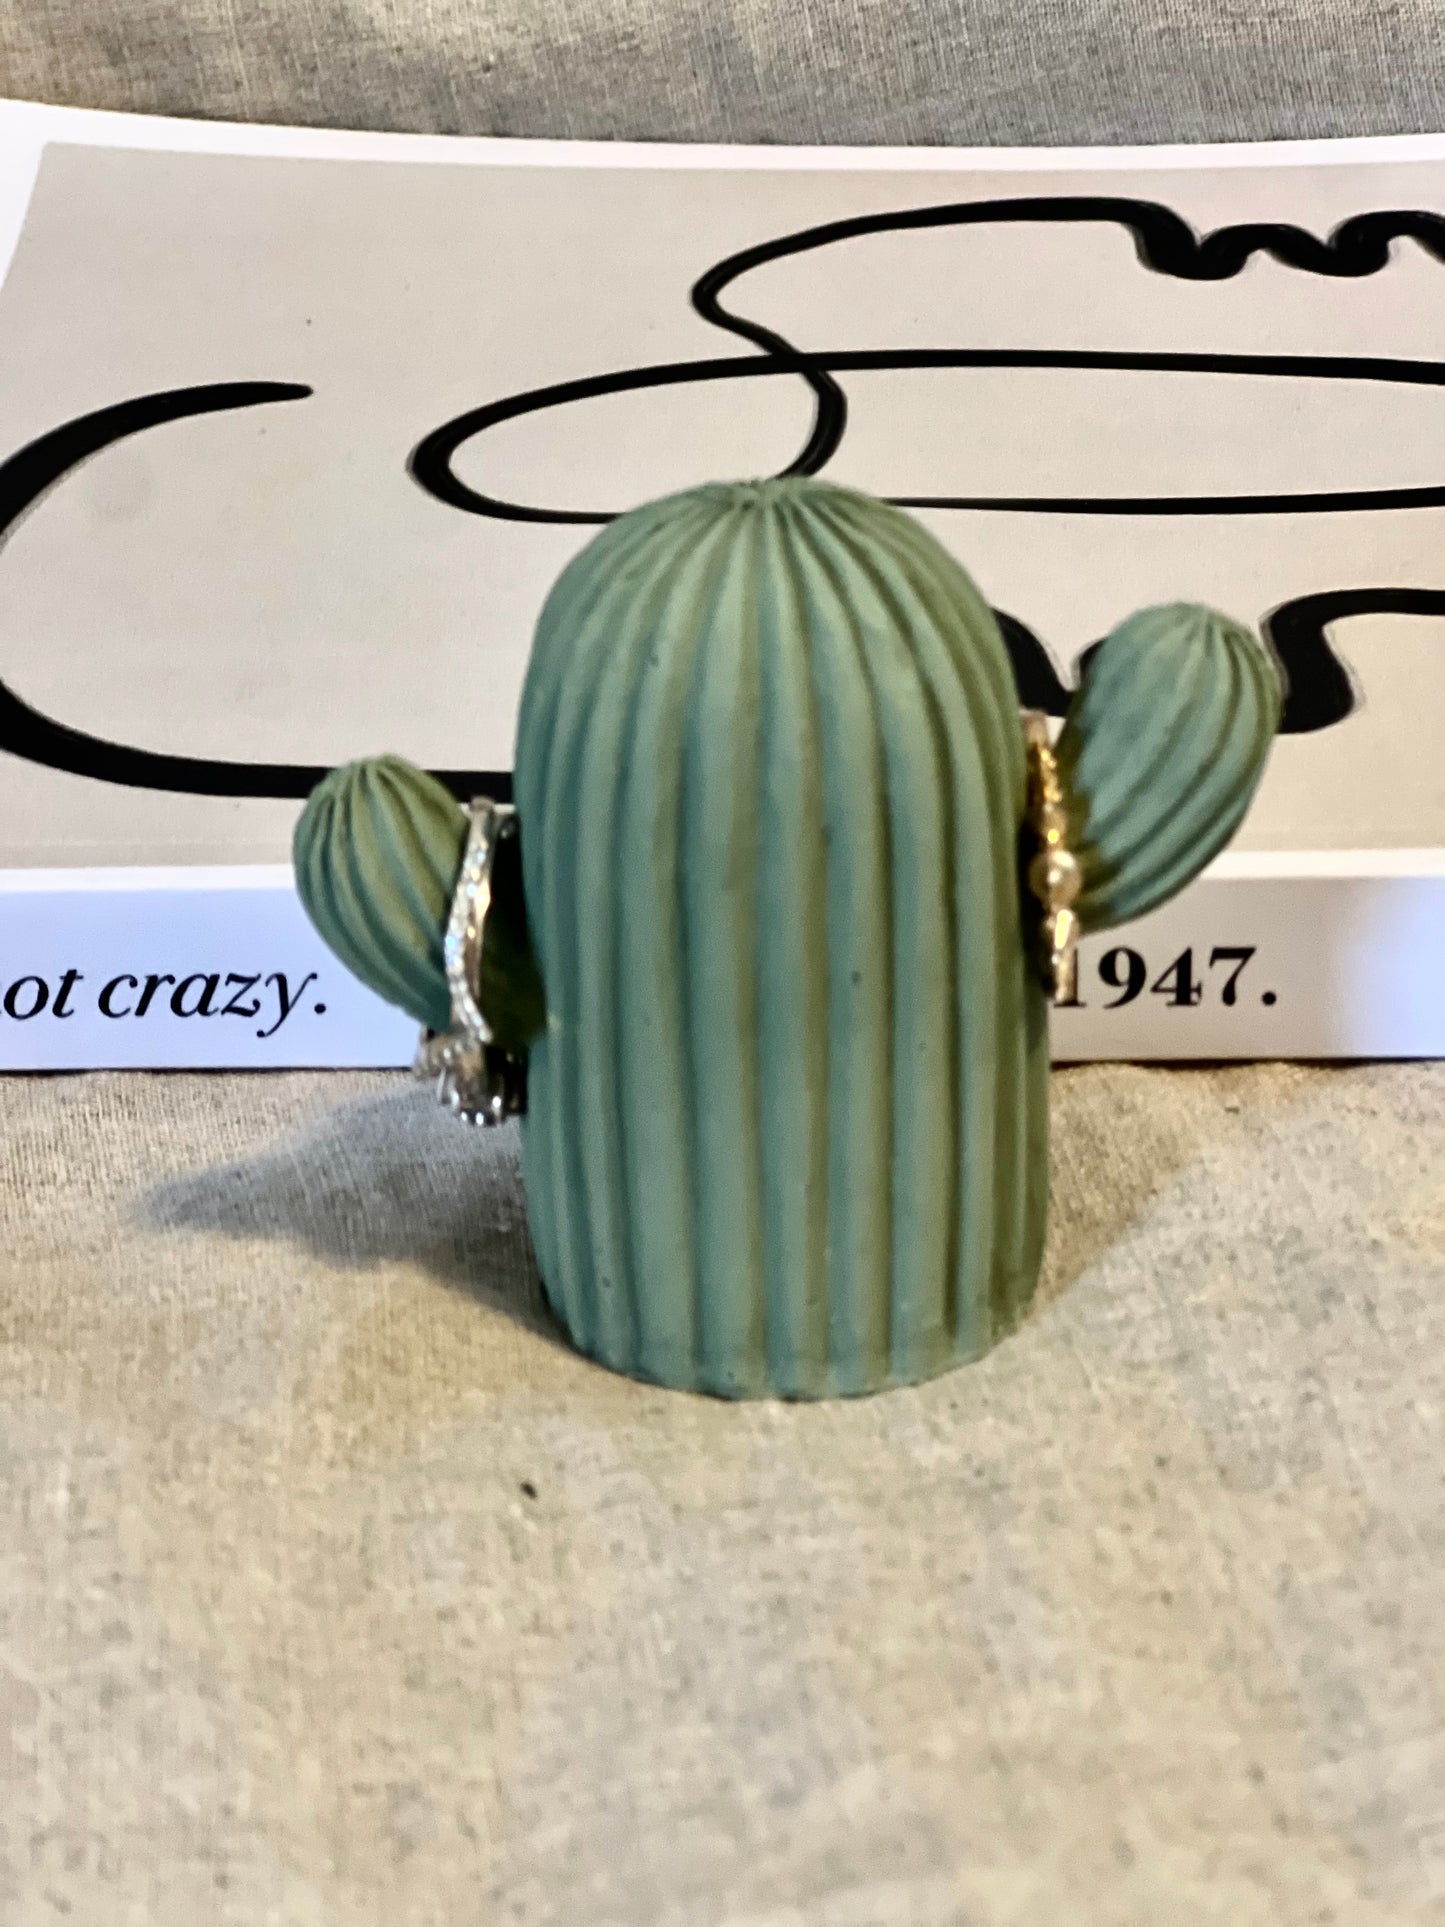 Cactus ring holder